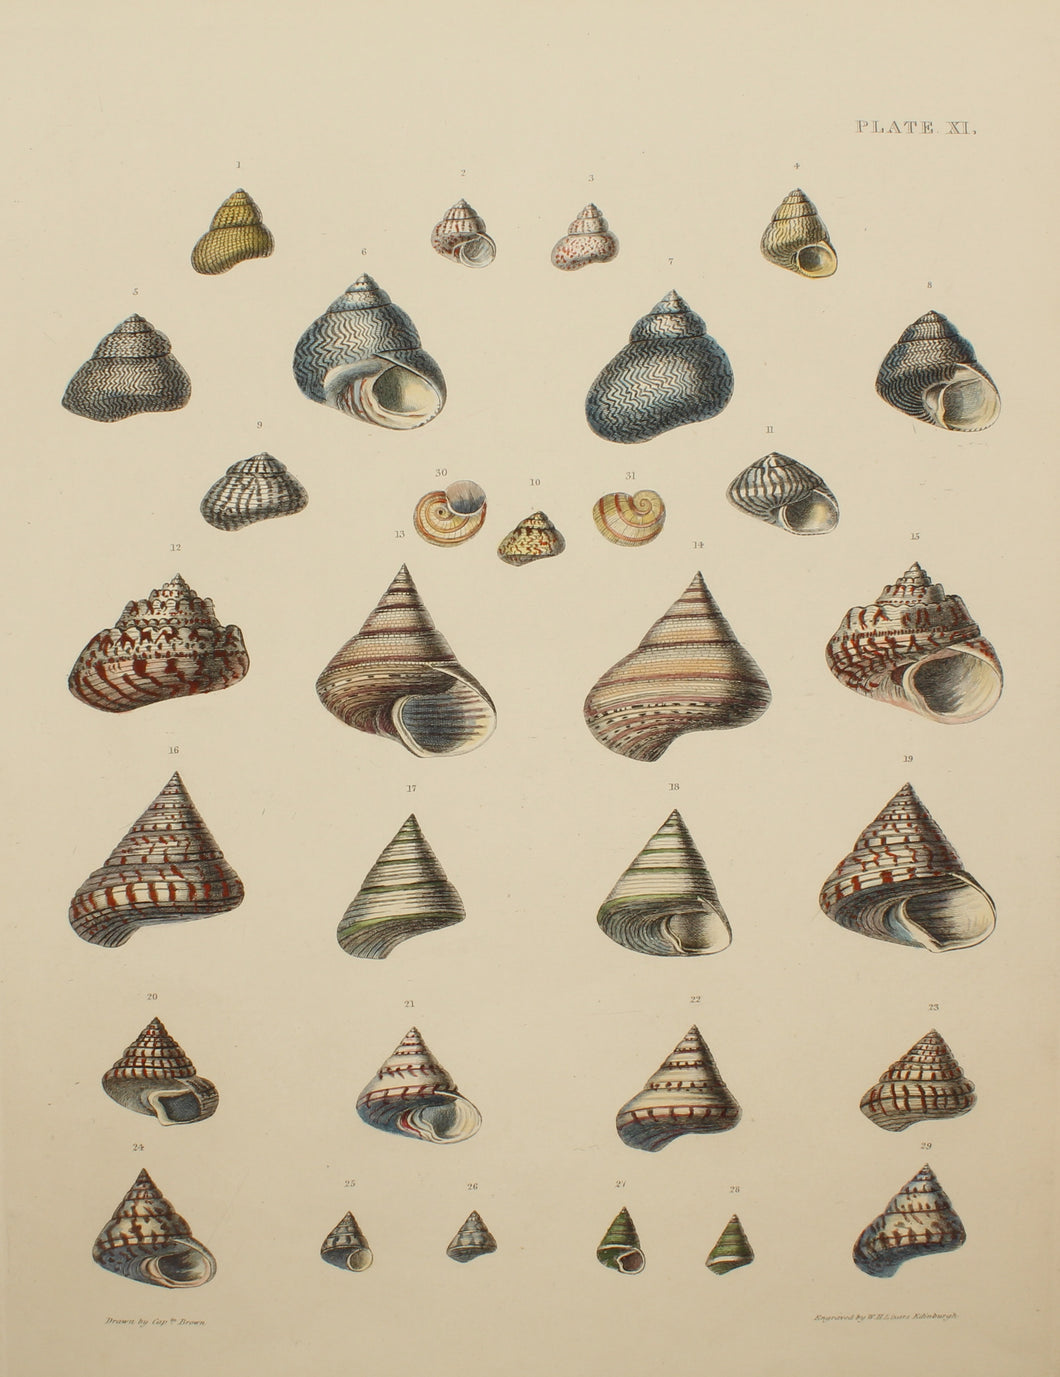 Seashells, Brown Captain Thomas, Shells, Plate XI,  1827